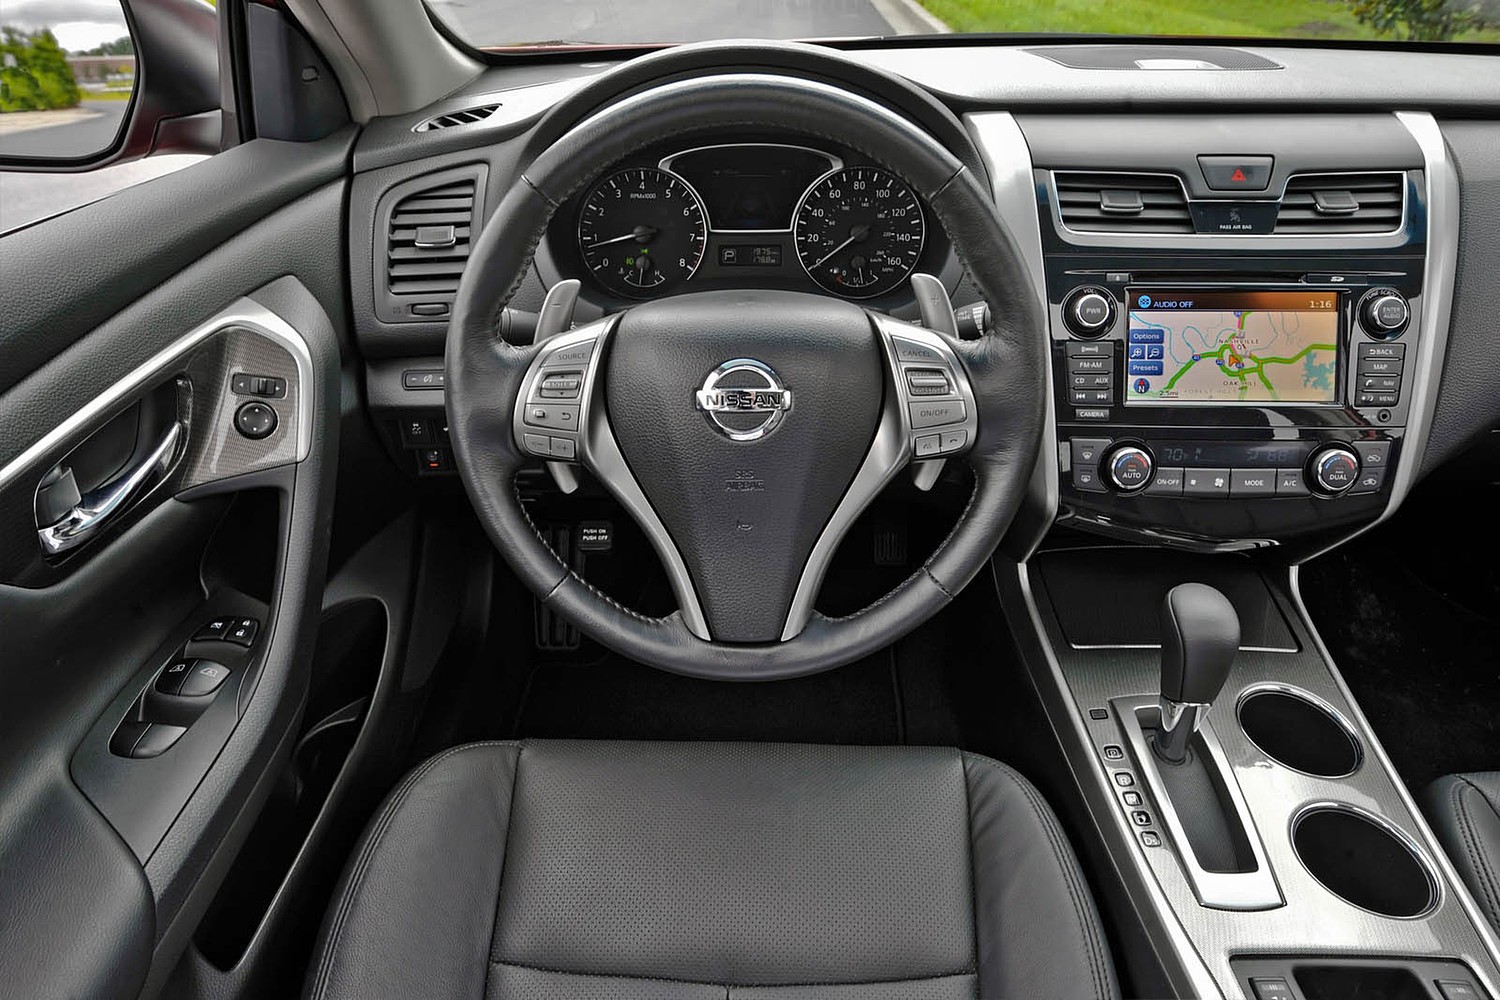 Nissan Altima 3.5 SL Sedan Interior (2014 model year shown)